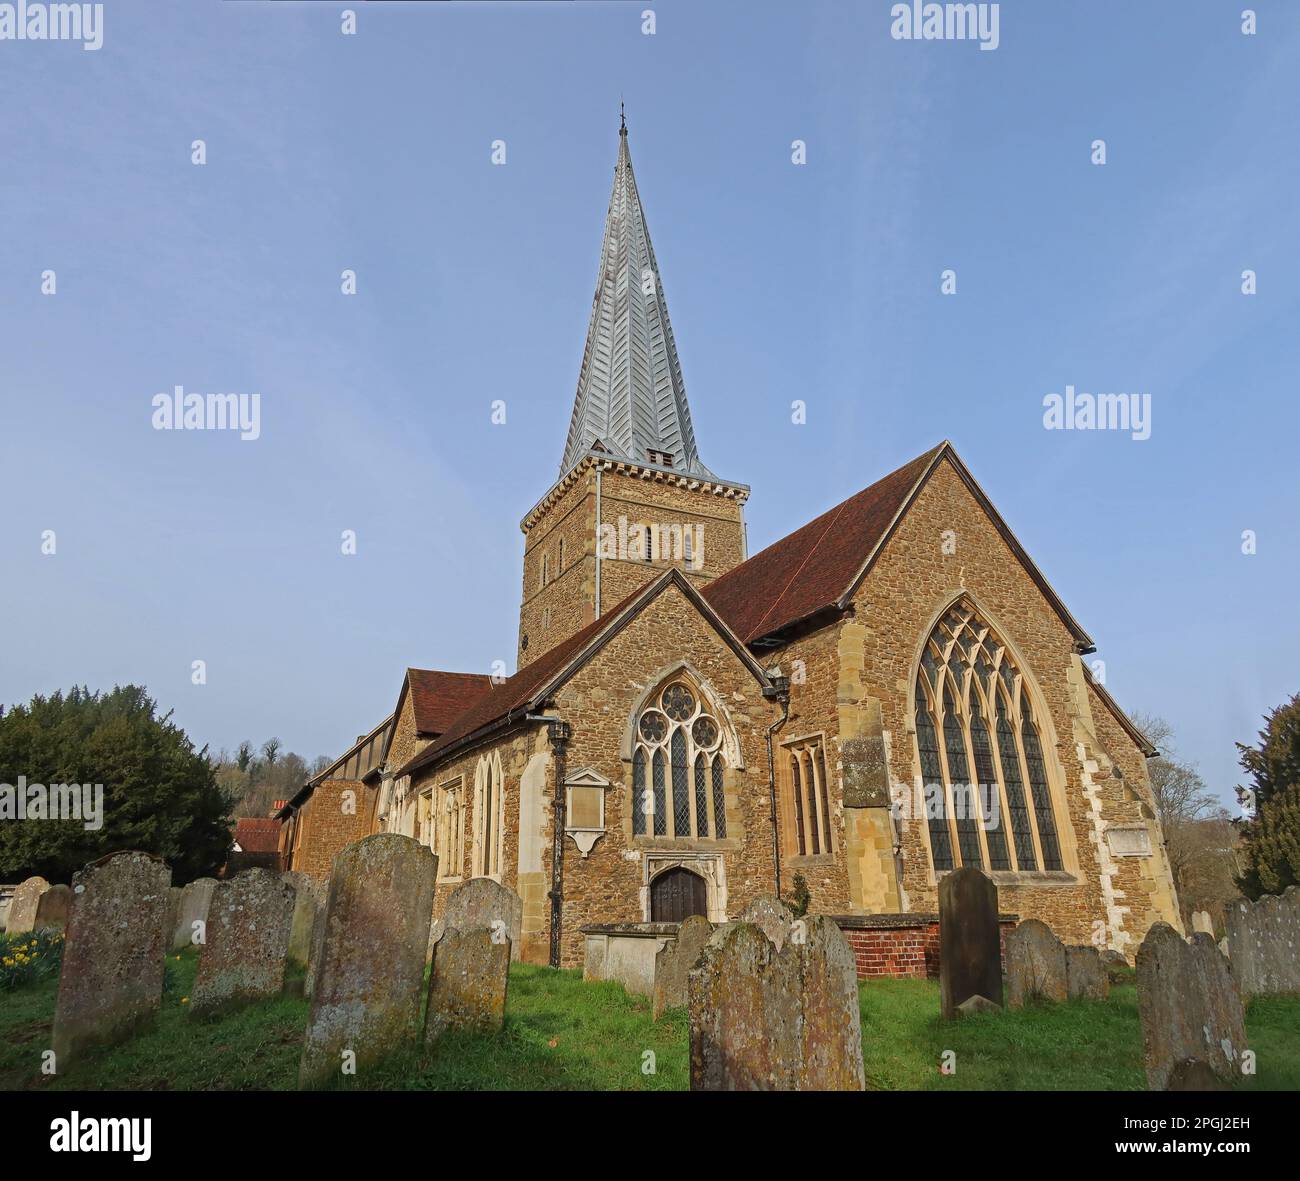 St Peter & Paul sandstone church, Borough Rd, Godalming, Surrey, England, UK, GU7 2AG from grave yard - Grade I listed building Stock Photo